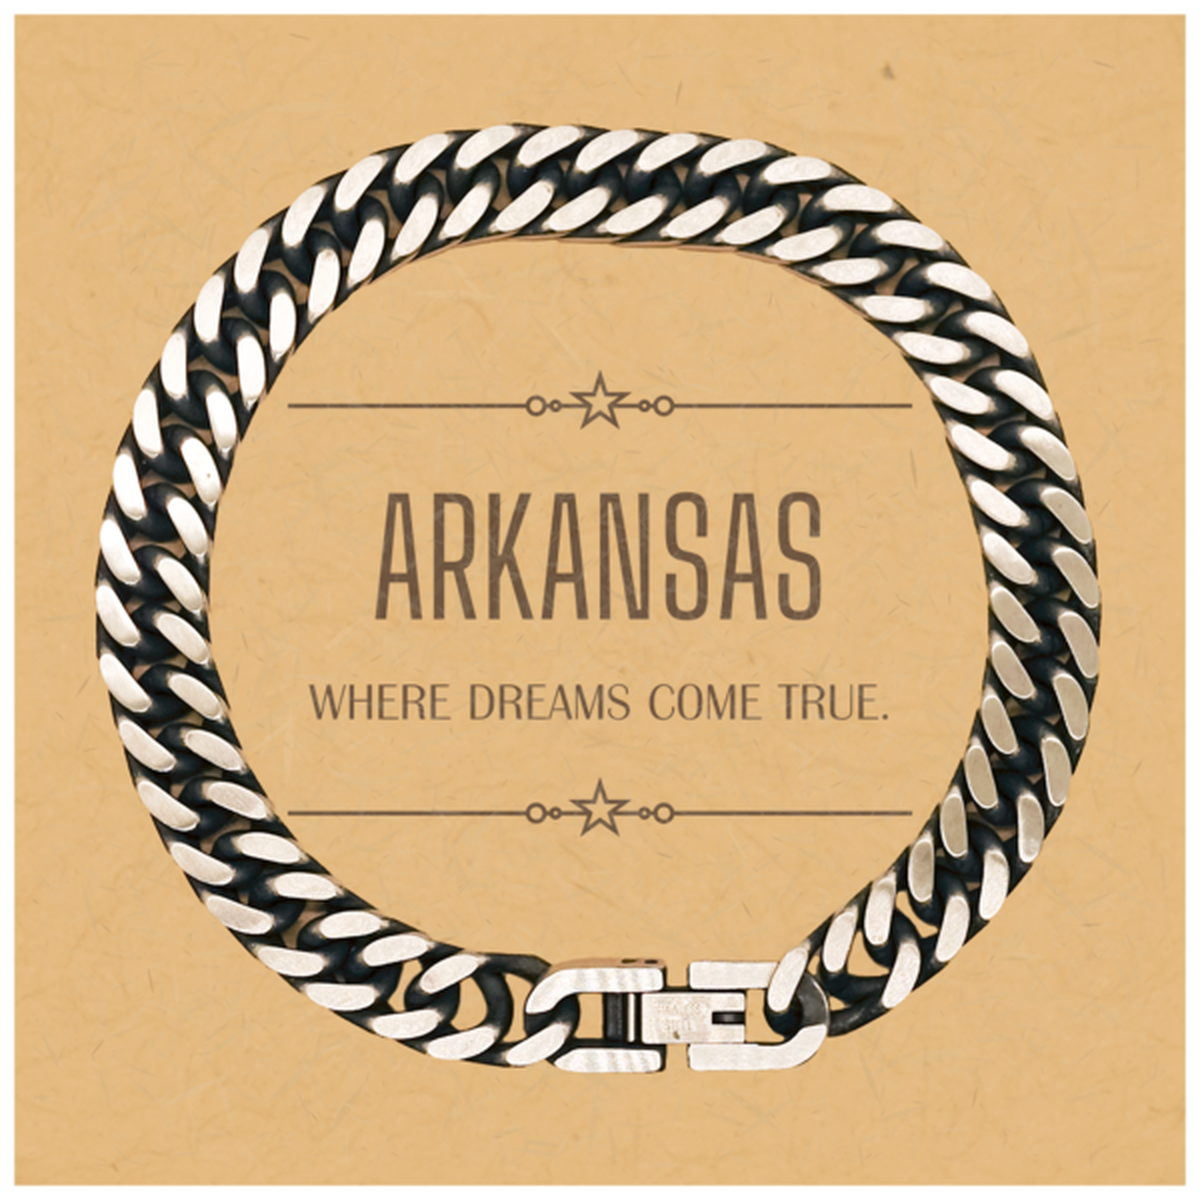 Love Arkansas State Cuban Link Chain Bracelet, Arkansas Where dreams come true, Birthday Christmas Inspirational Gifts For Arkansas Men, Women, Friends